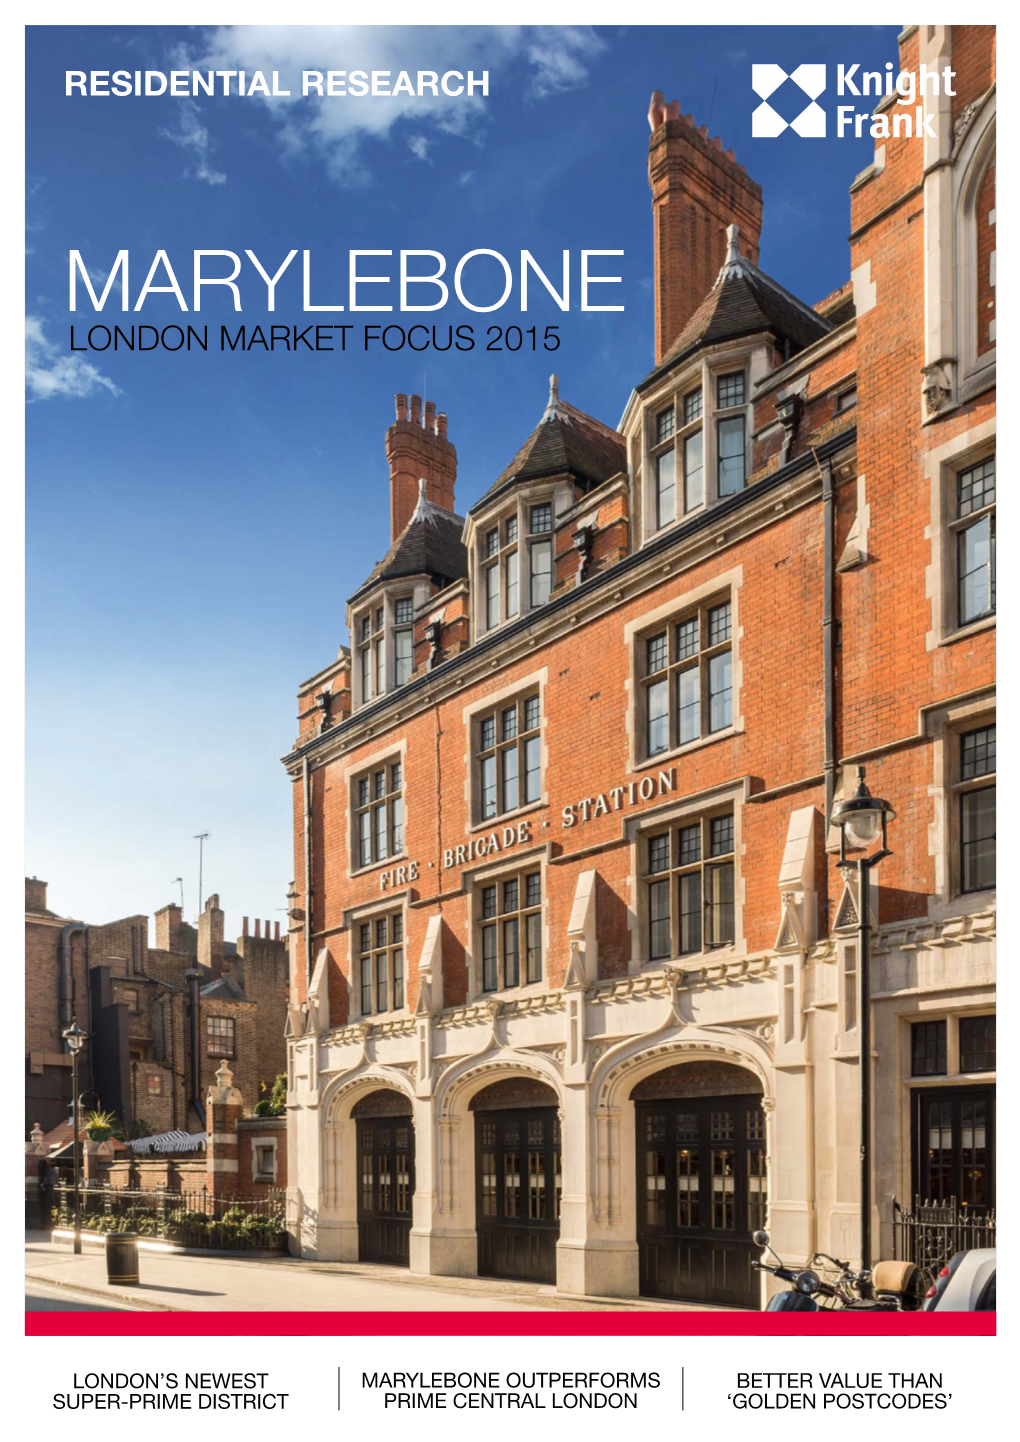 Marylebone London Market Focus 2015